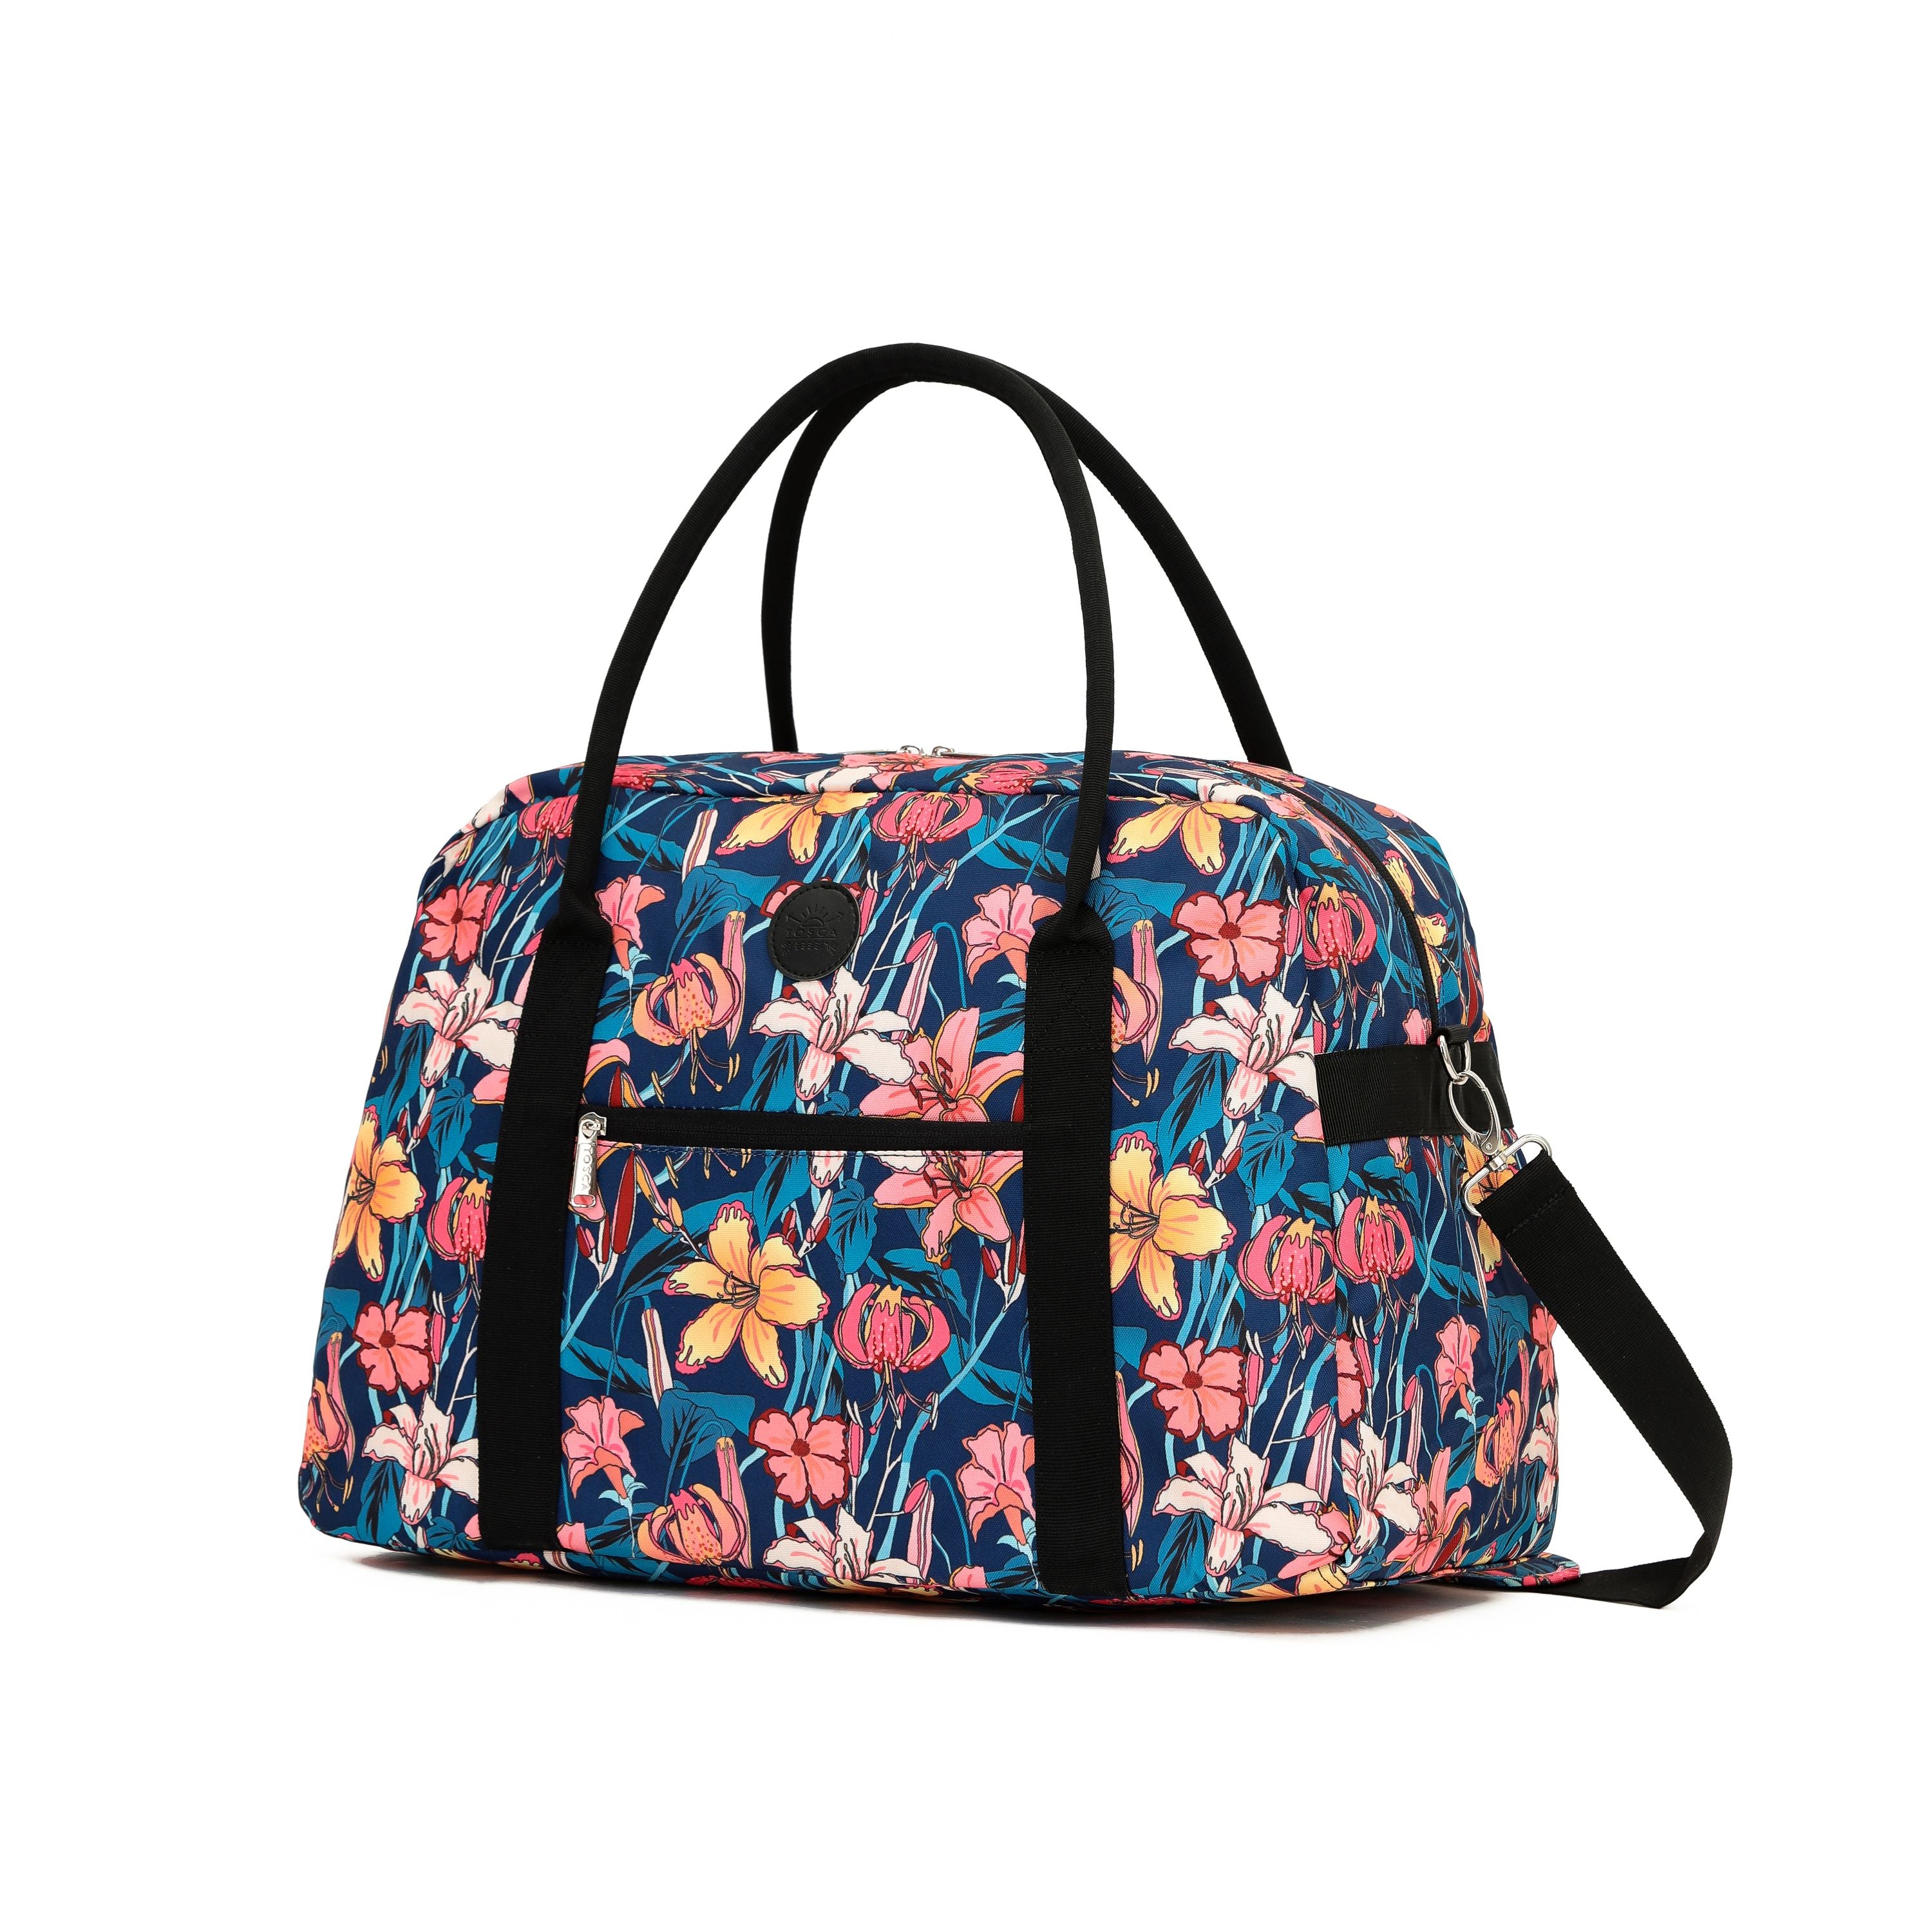 Tosca - TCA935 Fashion Tote/Duffle Bag - Blue Flowers-1